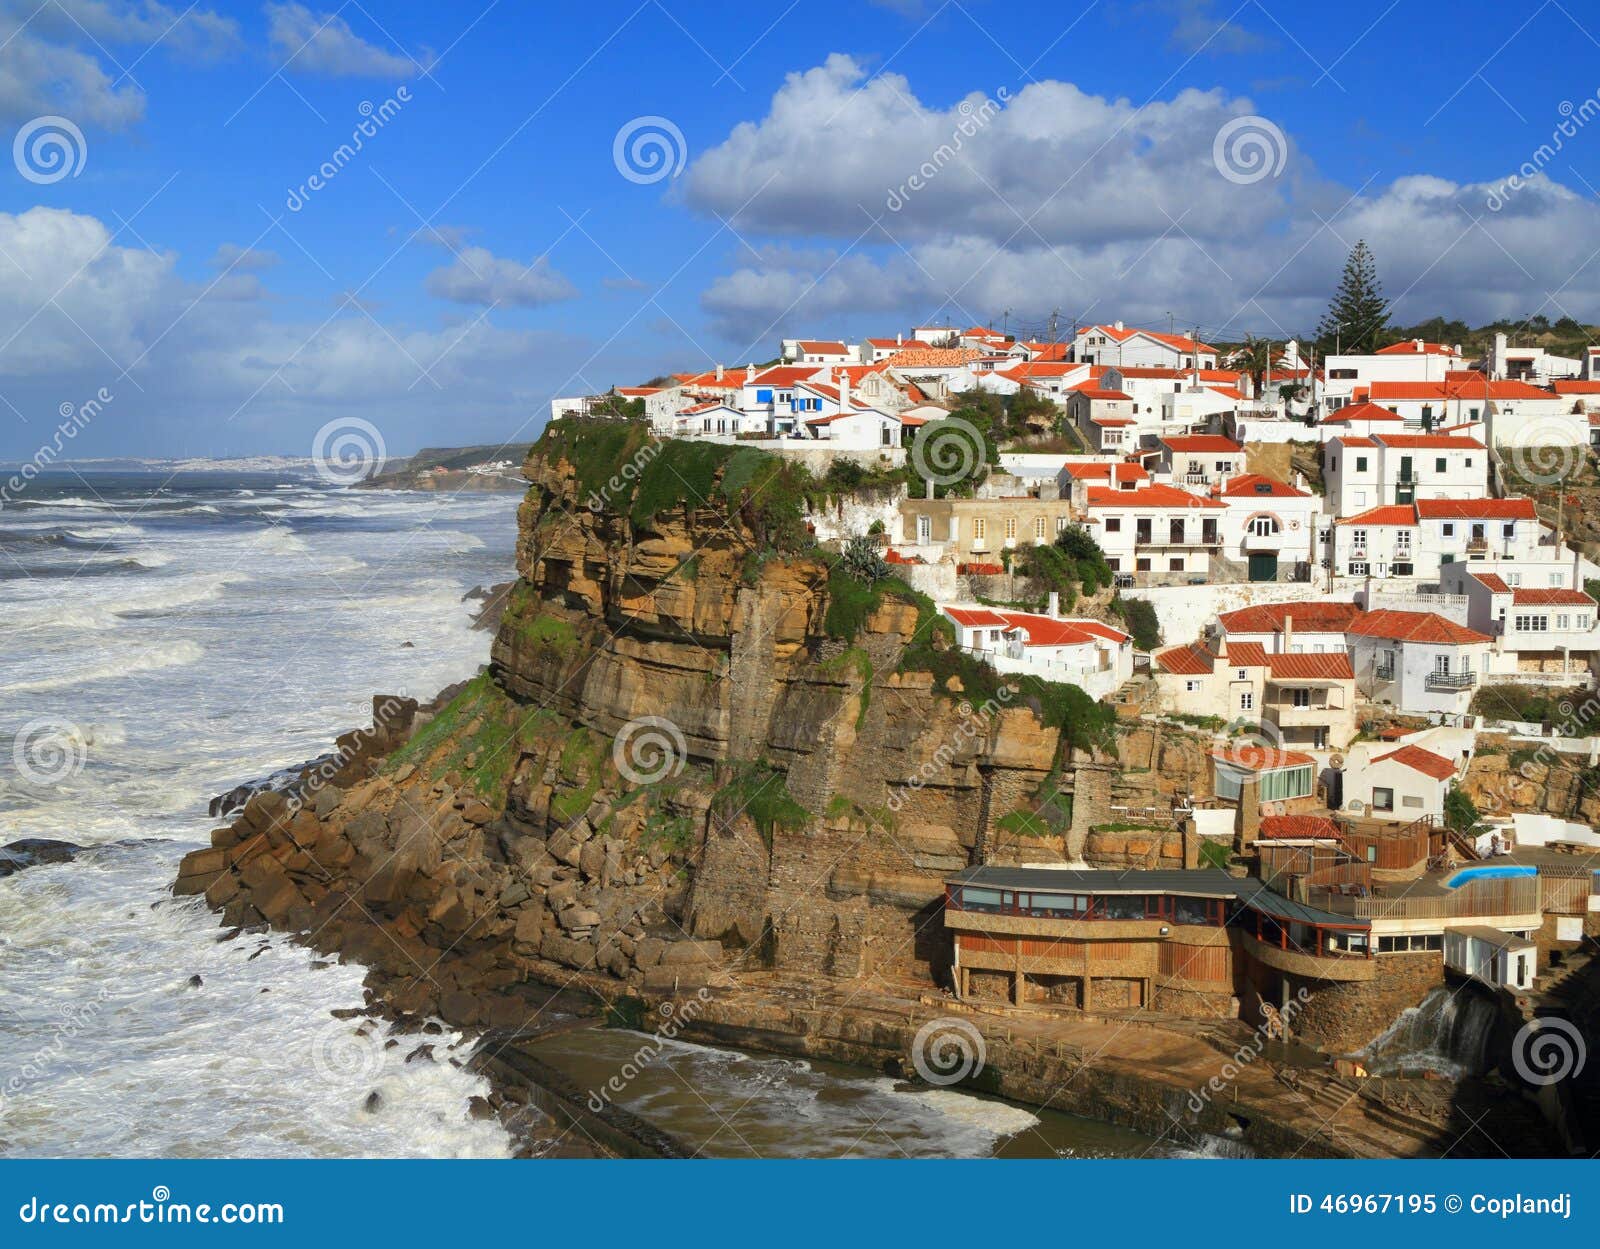 portugal, sintra, azenhas do mar village.